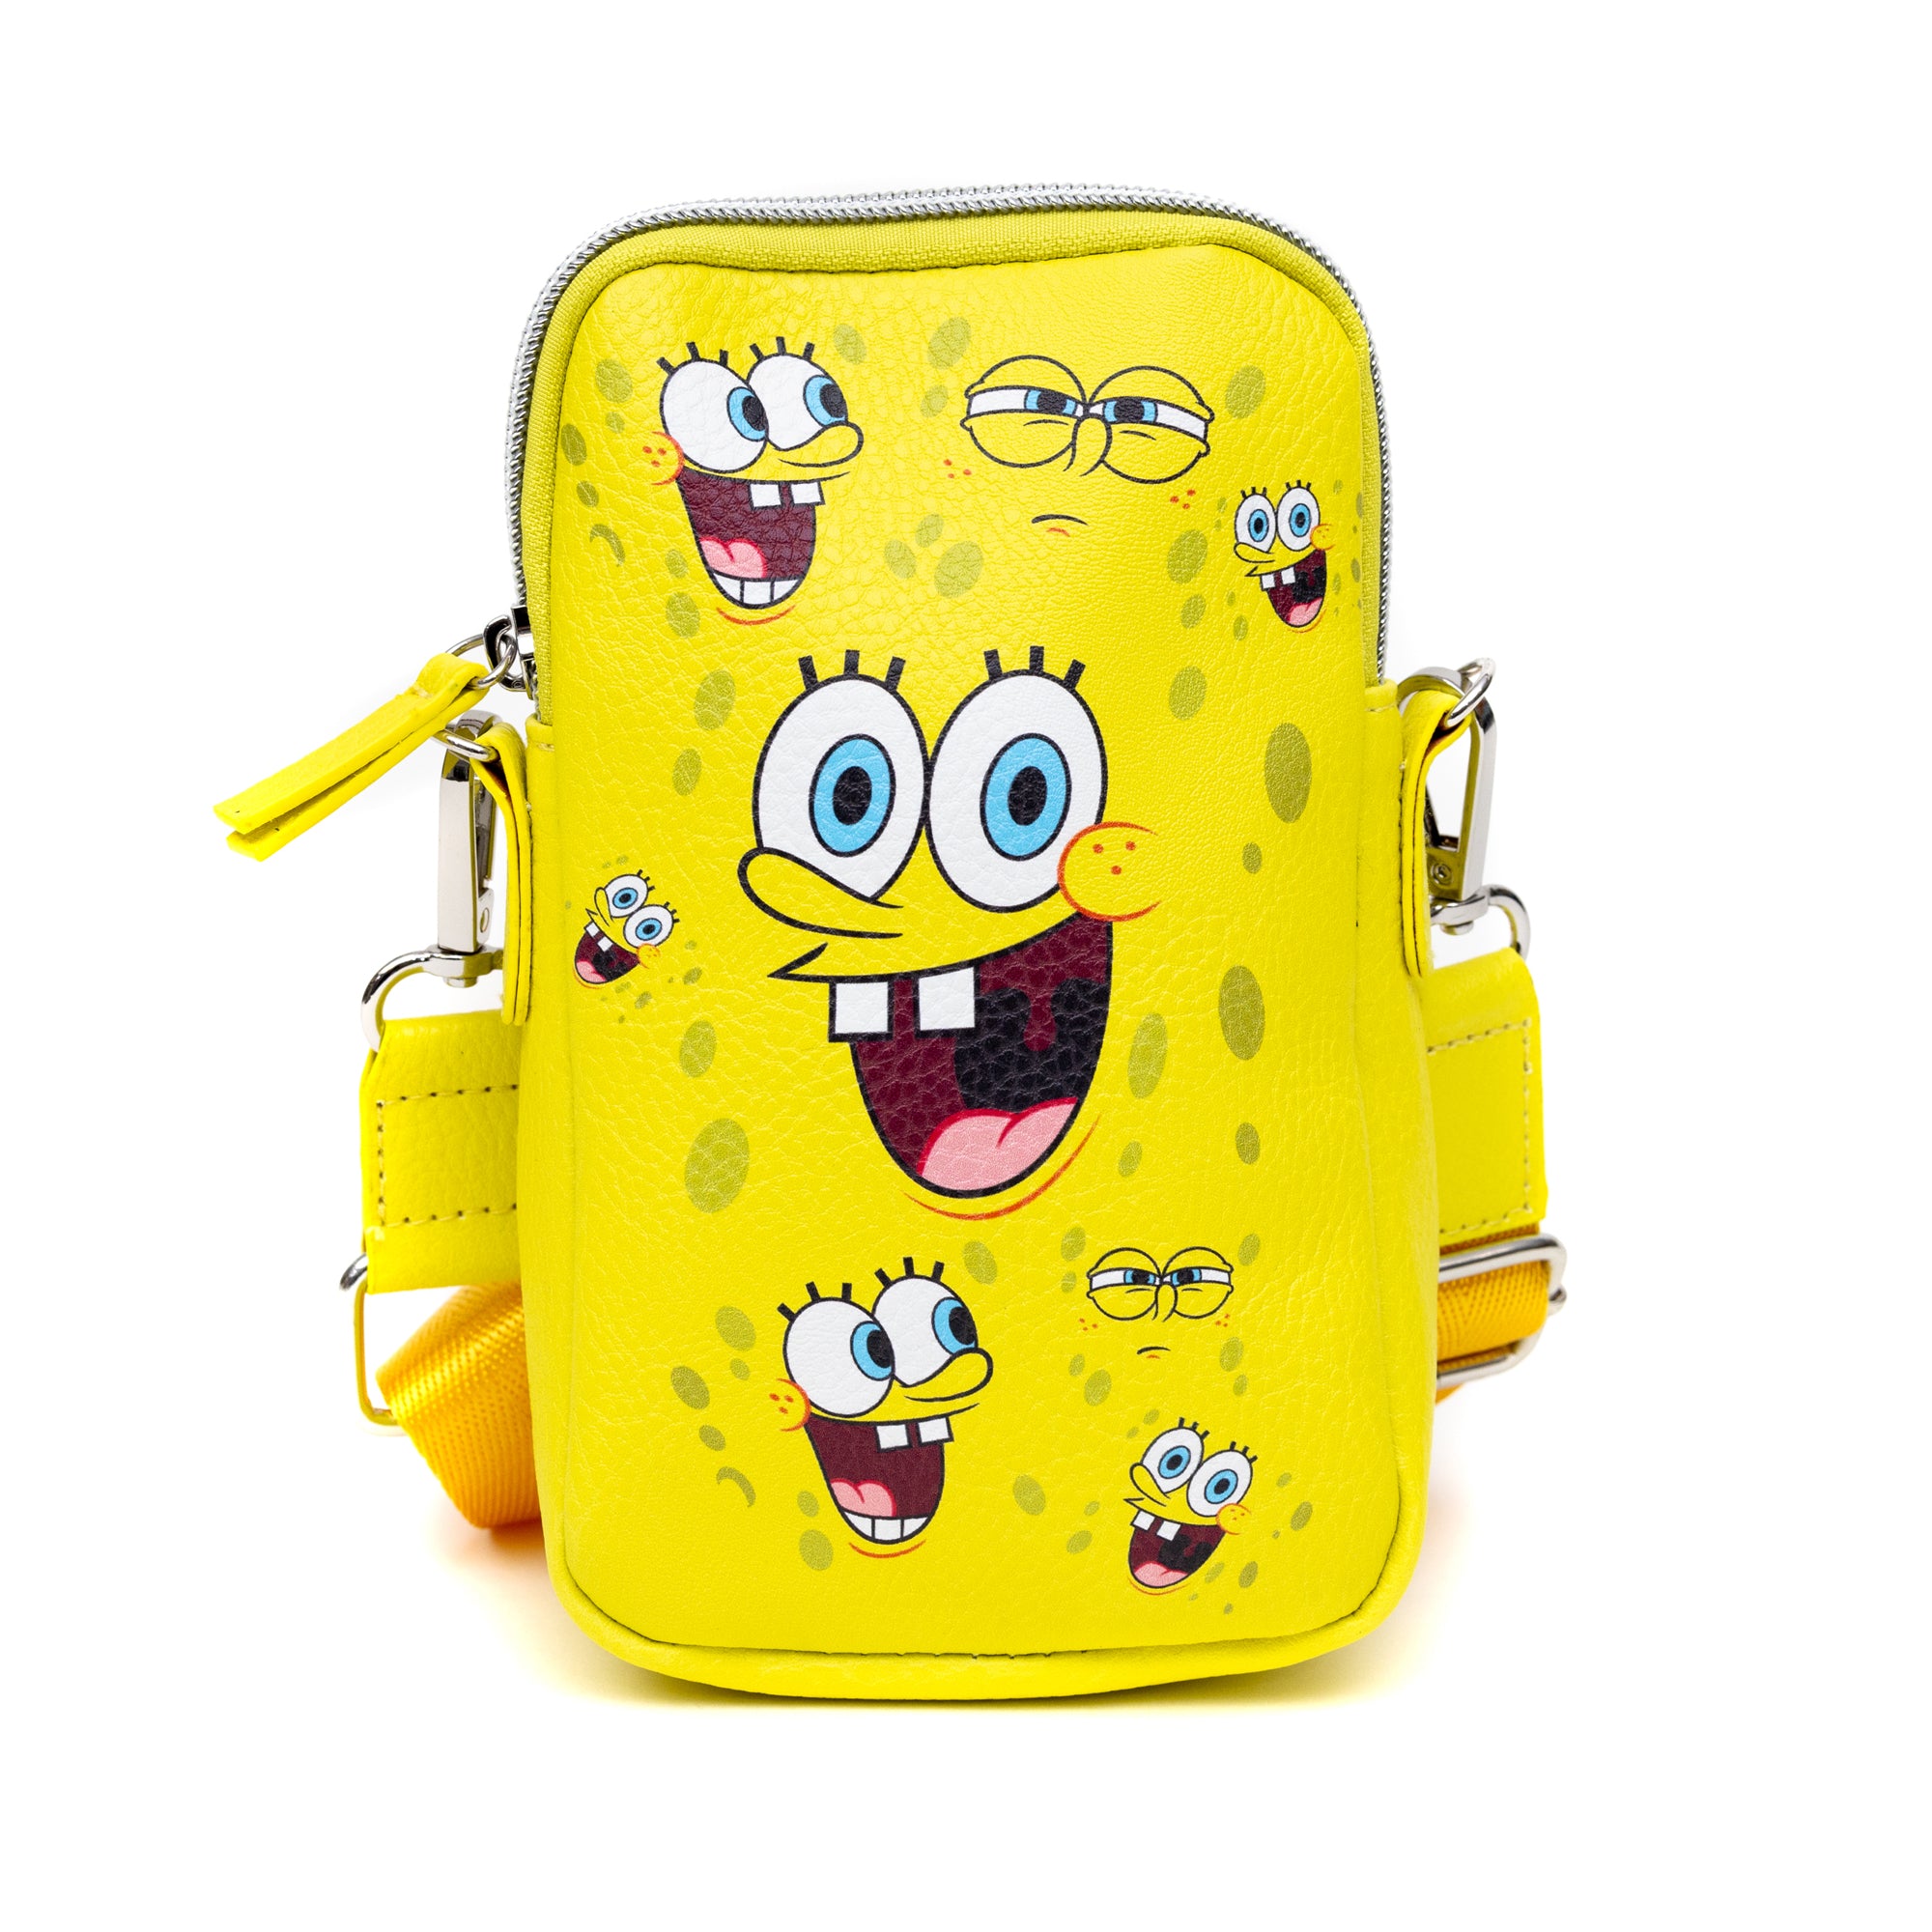 Spongebob Squarepants Figural Bag Clip Full Set Opening Blind Bag